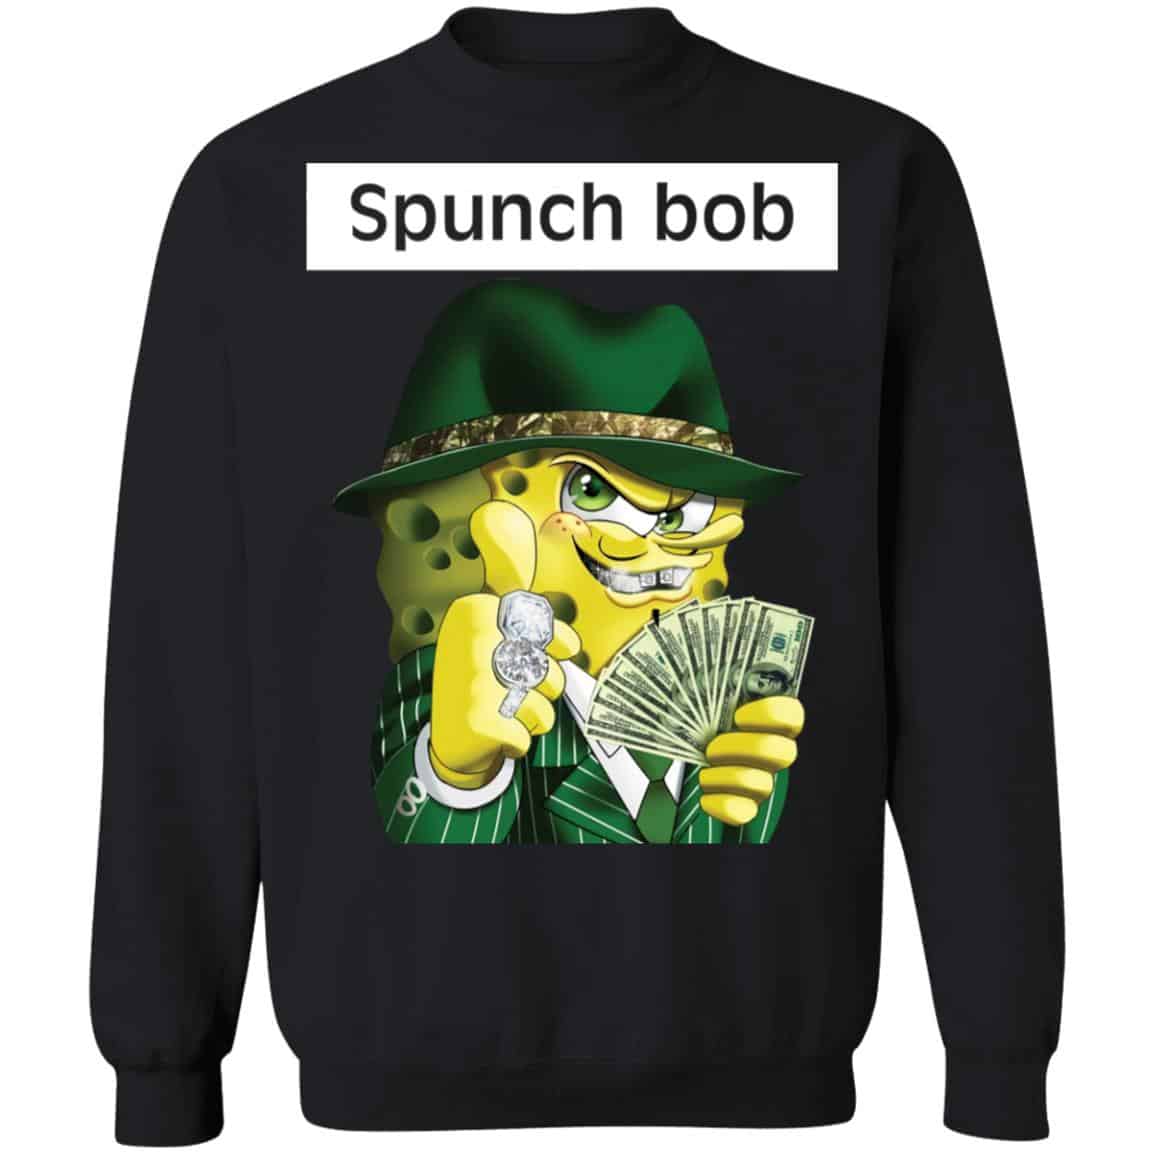 Spongebob Spunch Bob Shirt 2